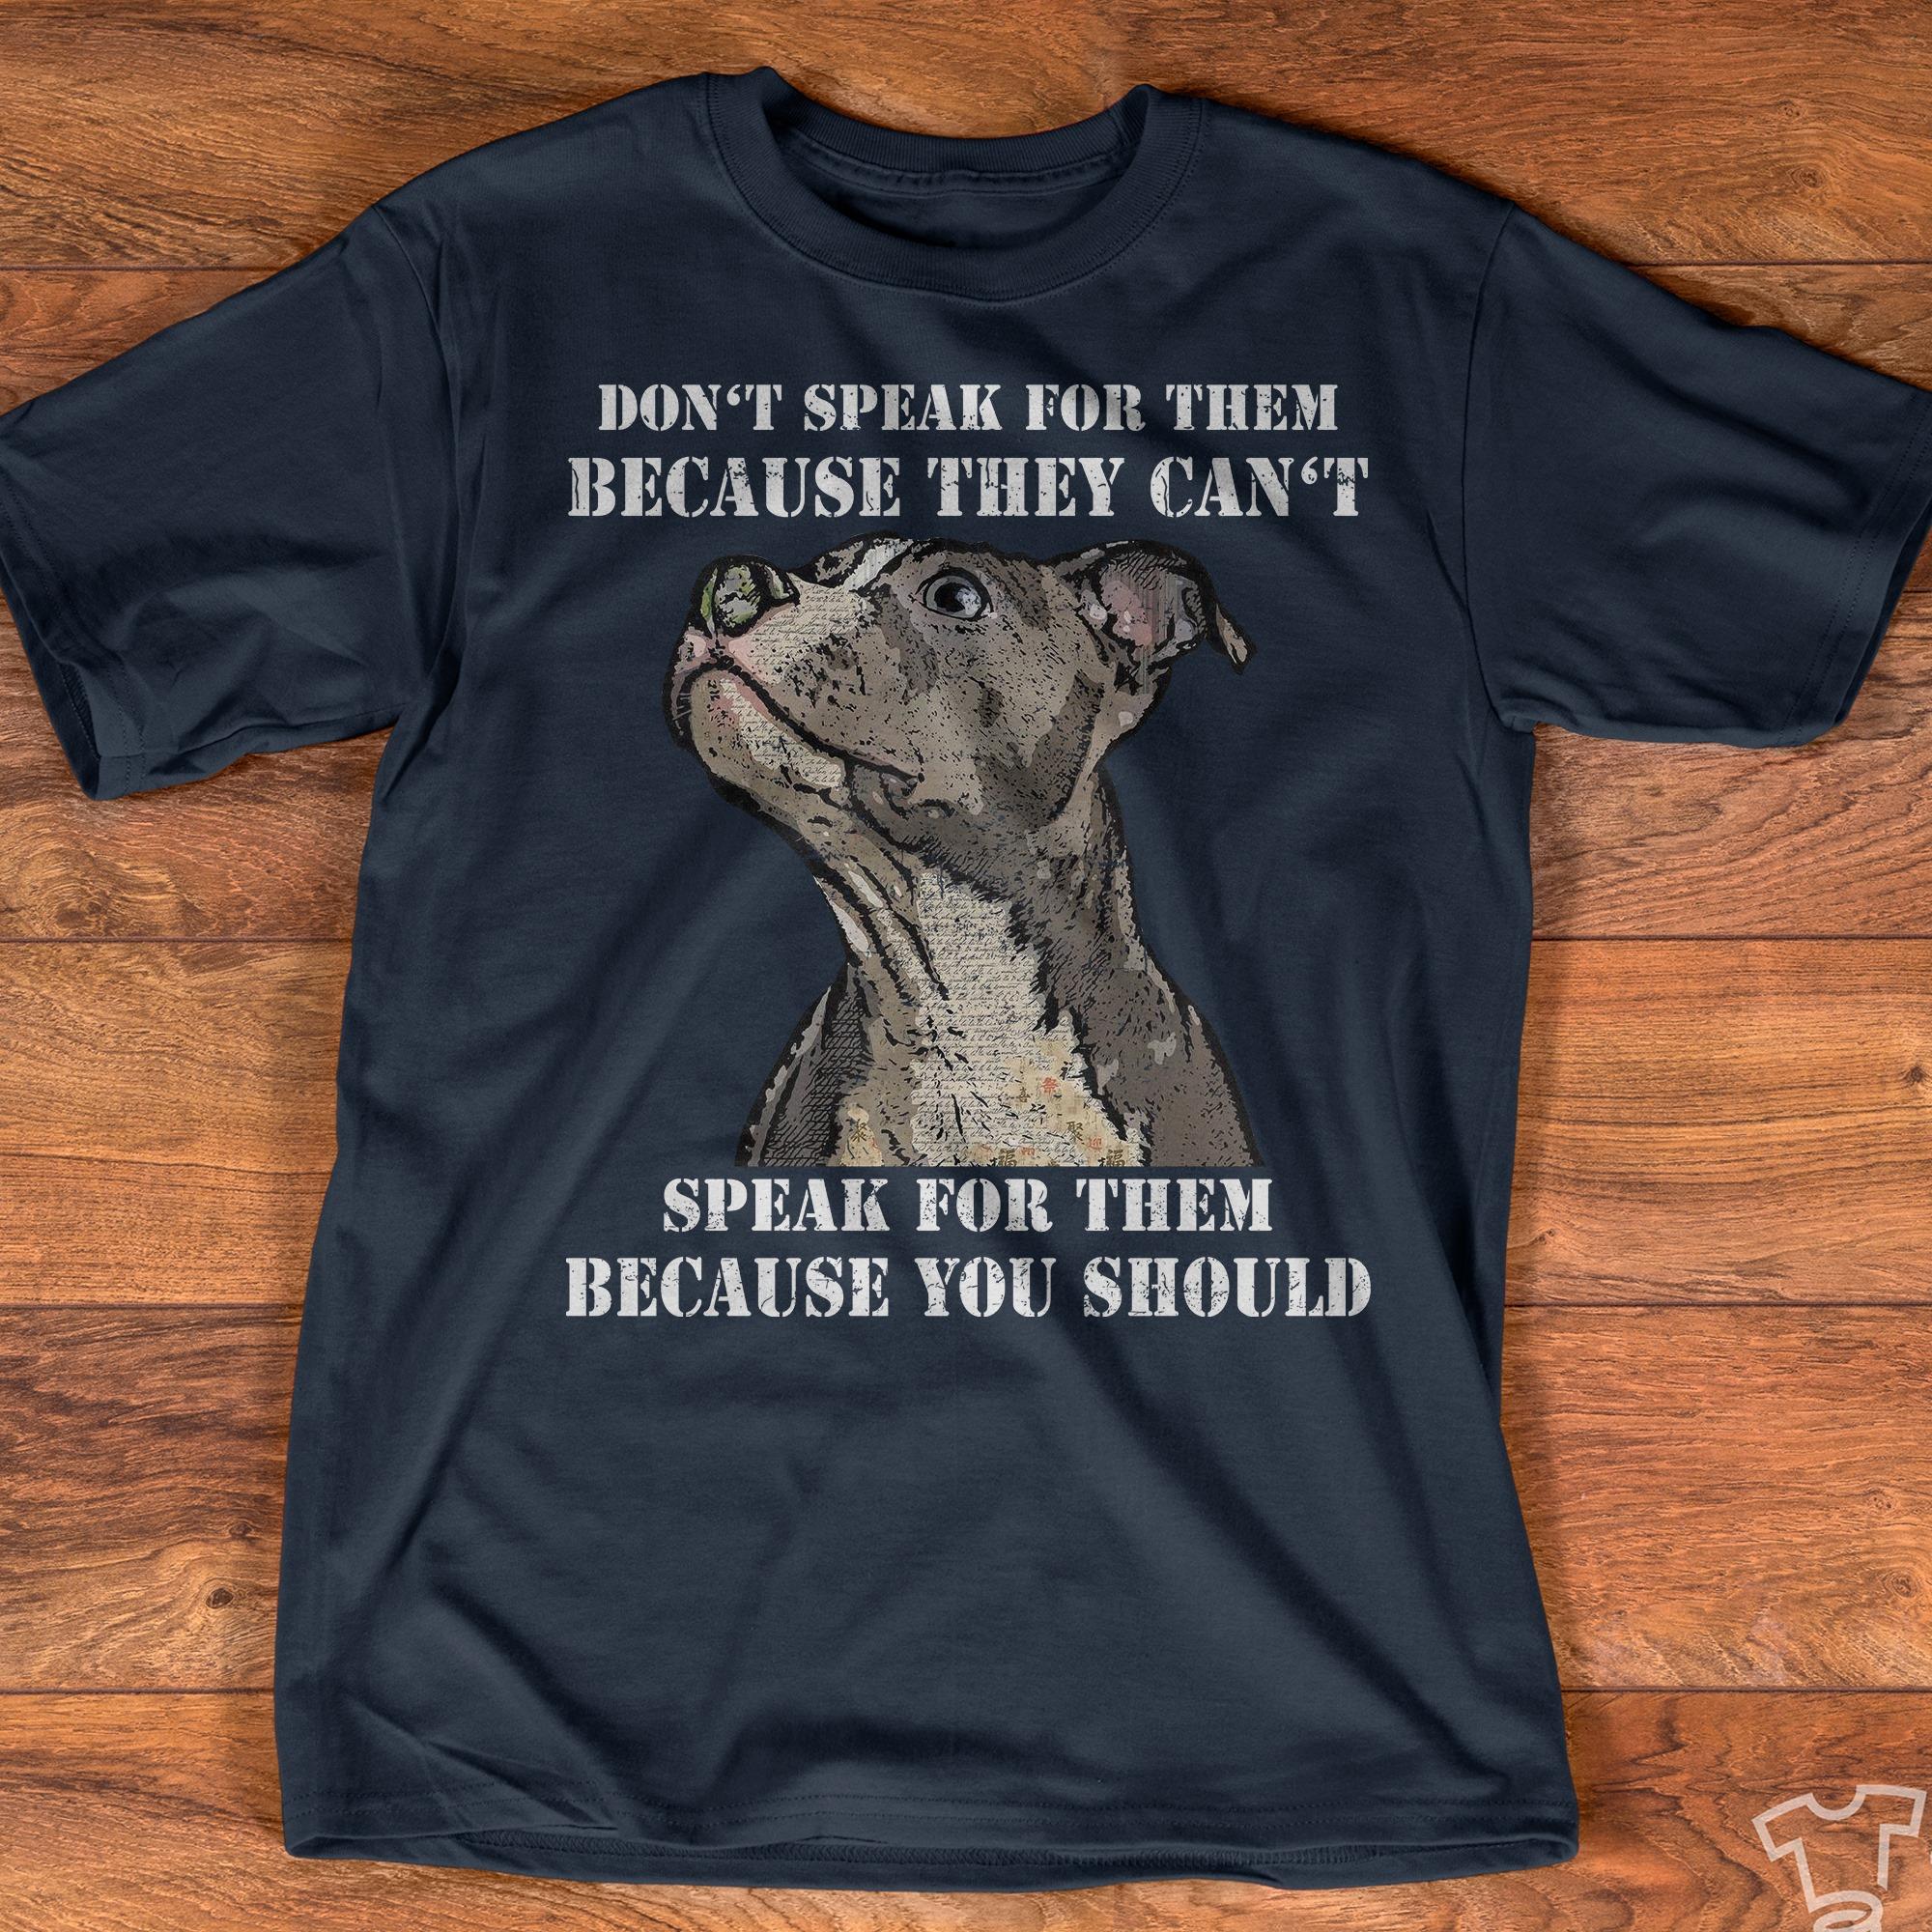 Pitbull Graphic T-shirt - Don't speak for them because they can't speak for them because you should